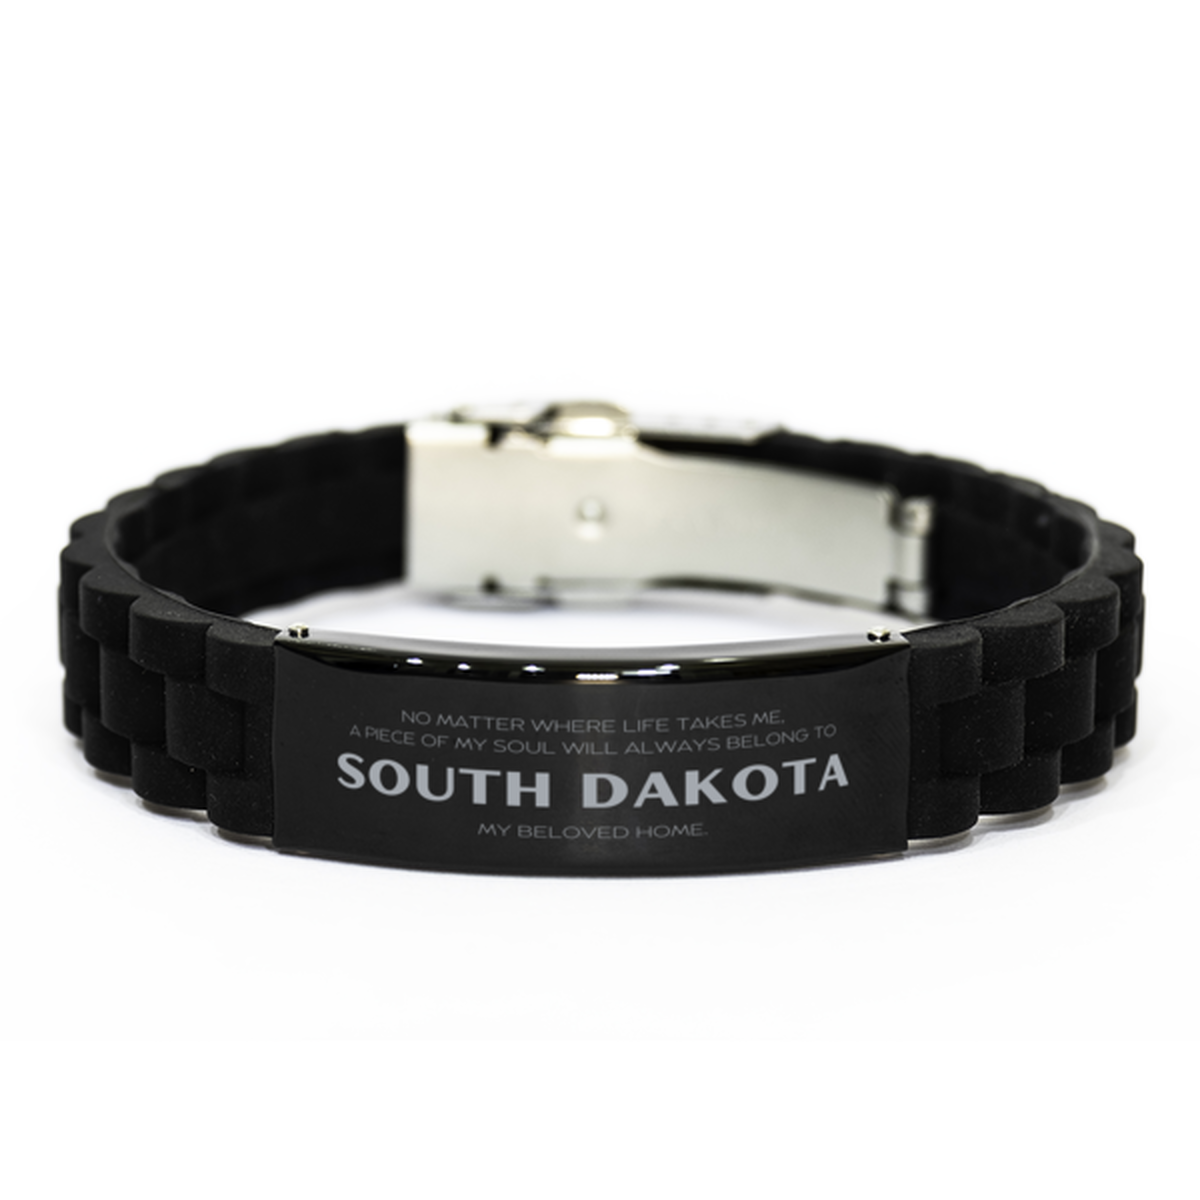 Love South Dakota State Gifts, My soul will always belong to South Dakota, Proud Black Glidelock Clasp Bracelet, Birthday Unique Gifts For South Dakota Men, Women, Friends